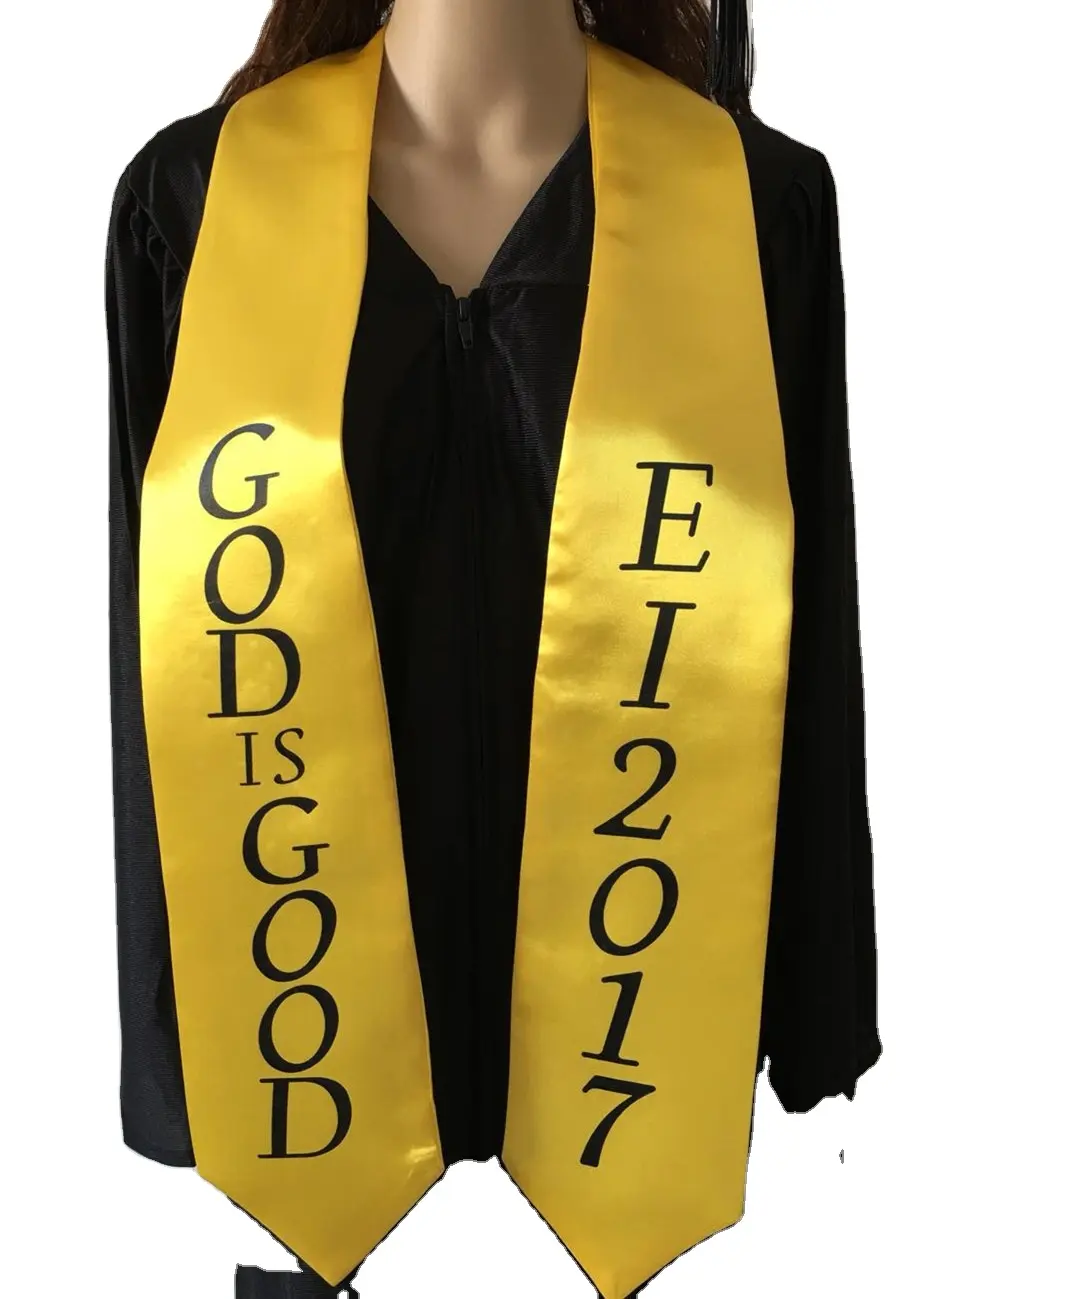 Ucuz toptan düz saten mezuniyet Stoles/Sashes lise mezuniyet elbisesi